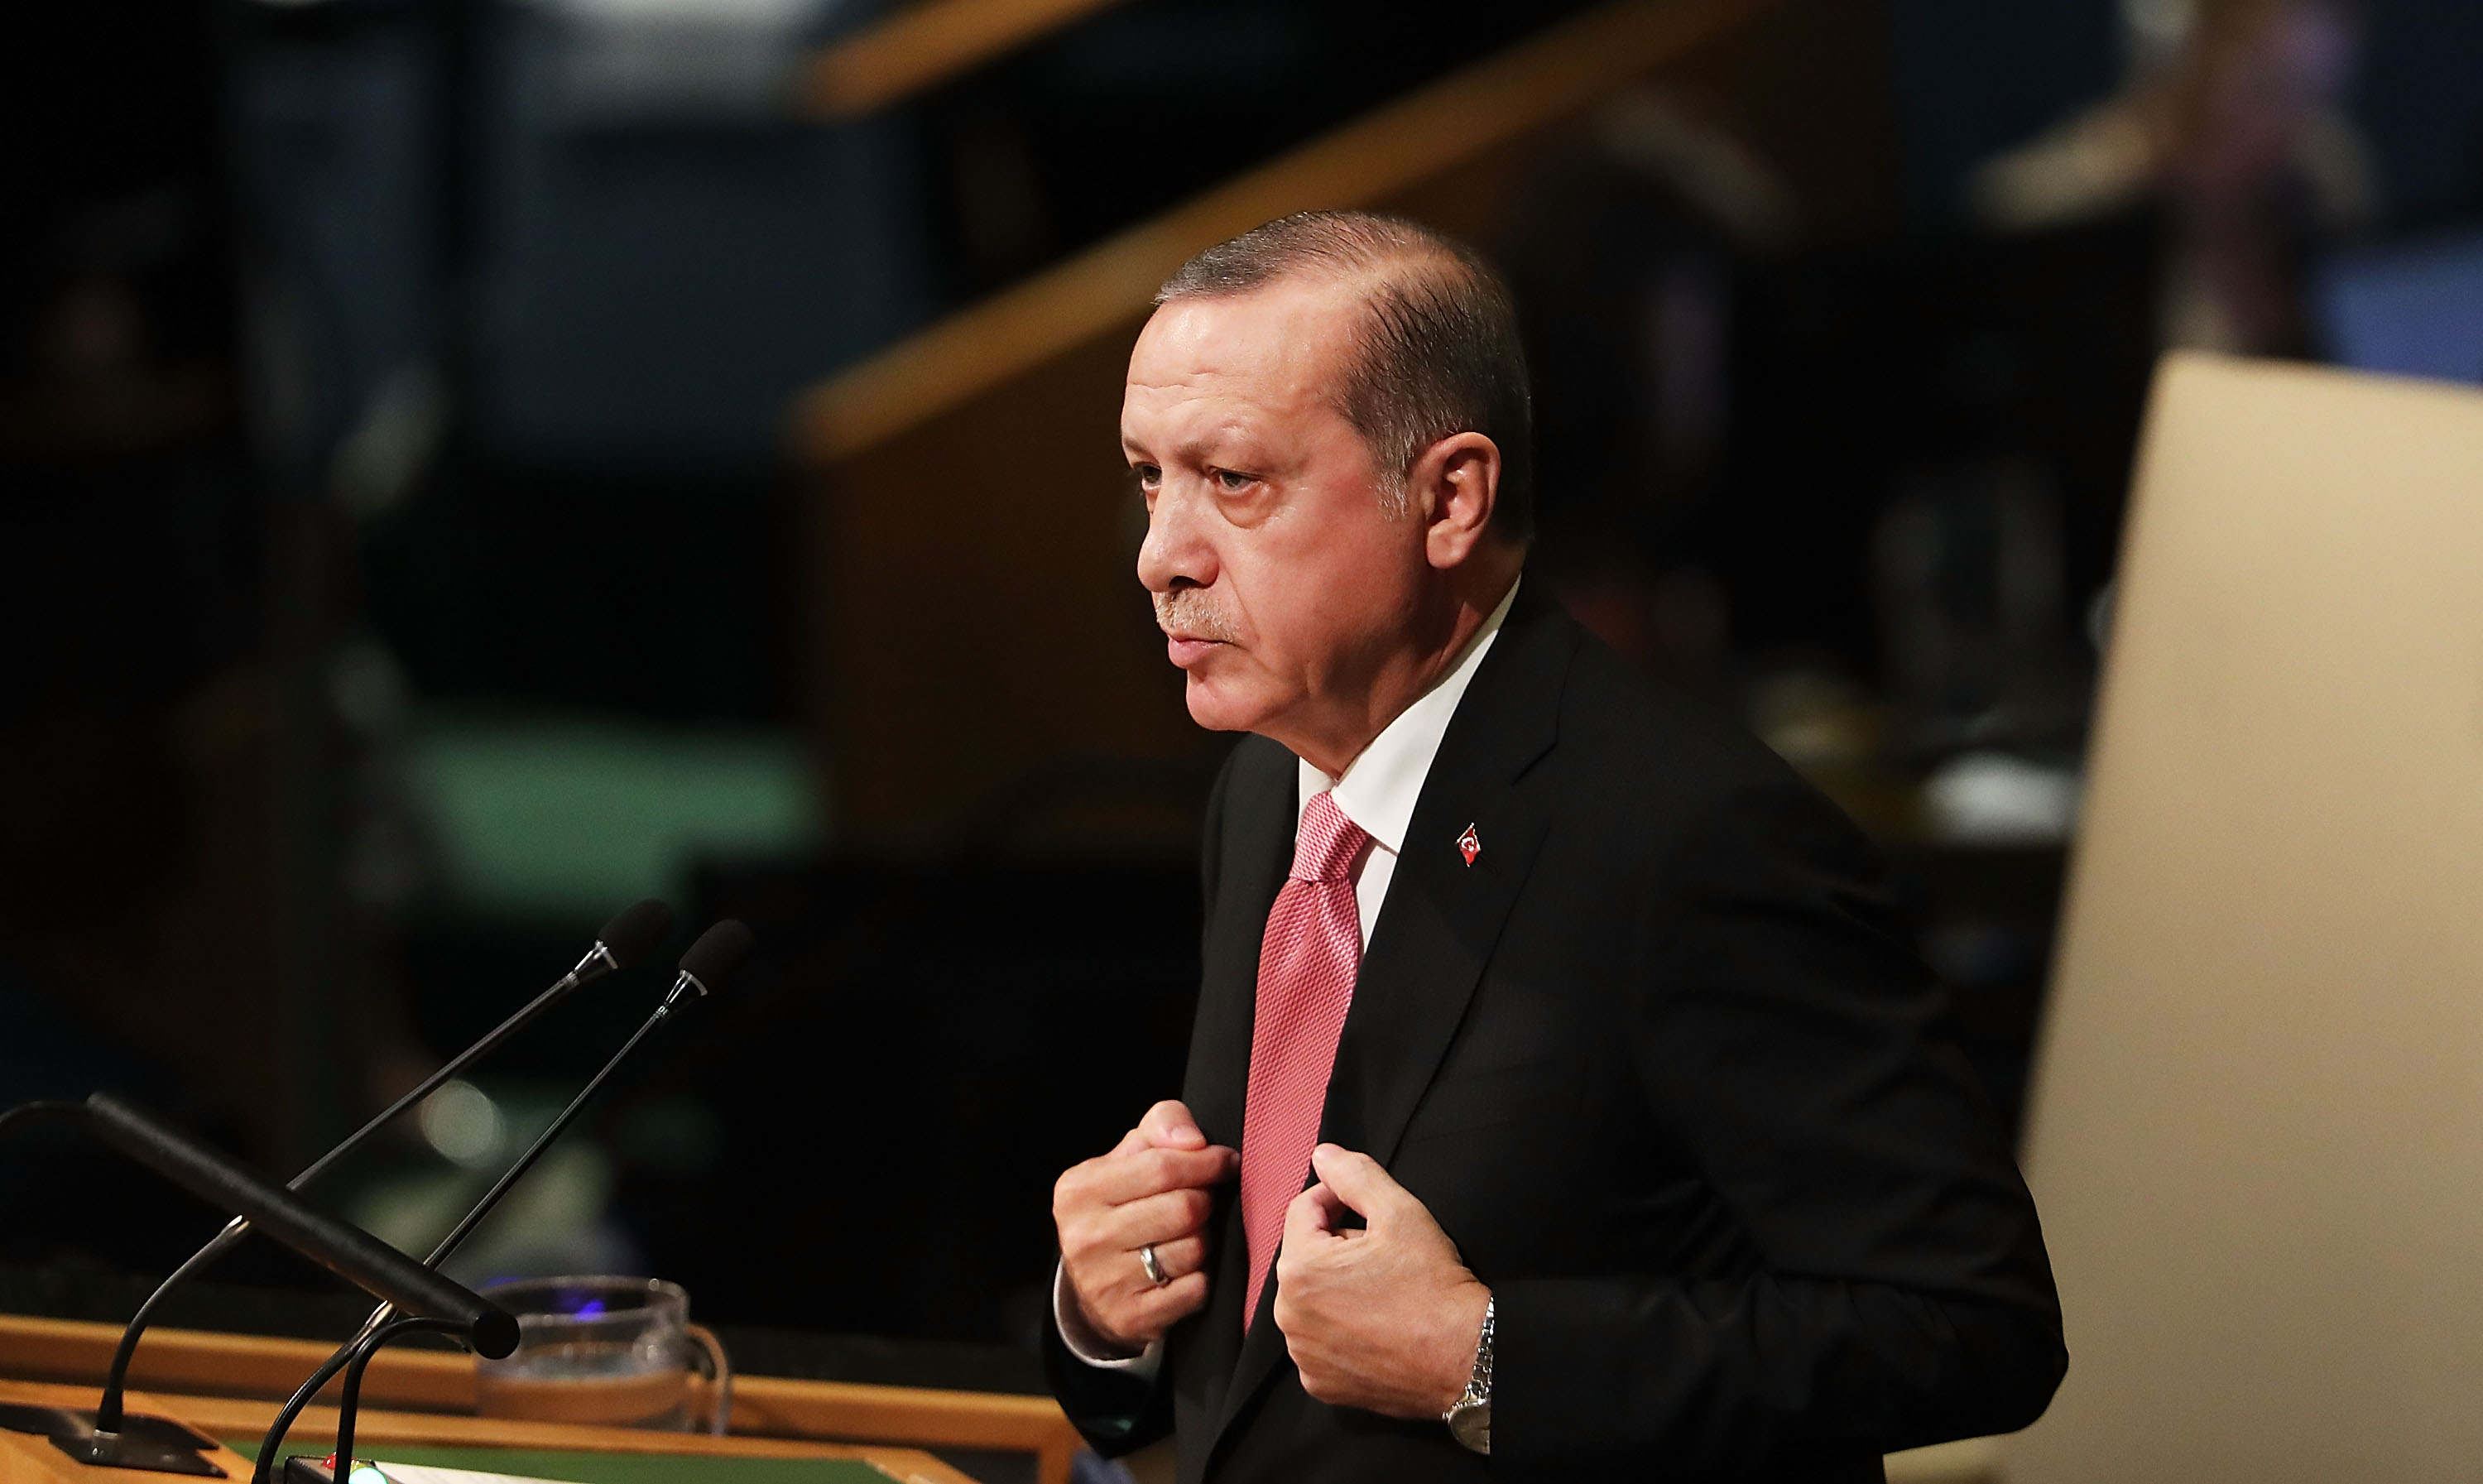 Erdogan faces major test as Turks vote for president, parliament